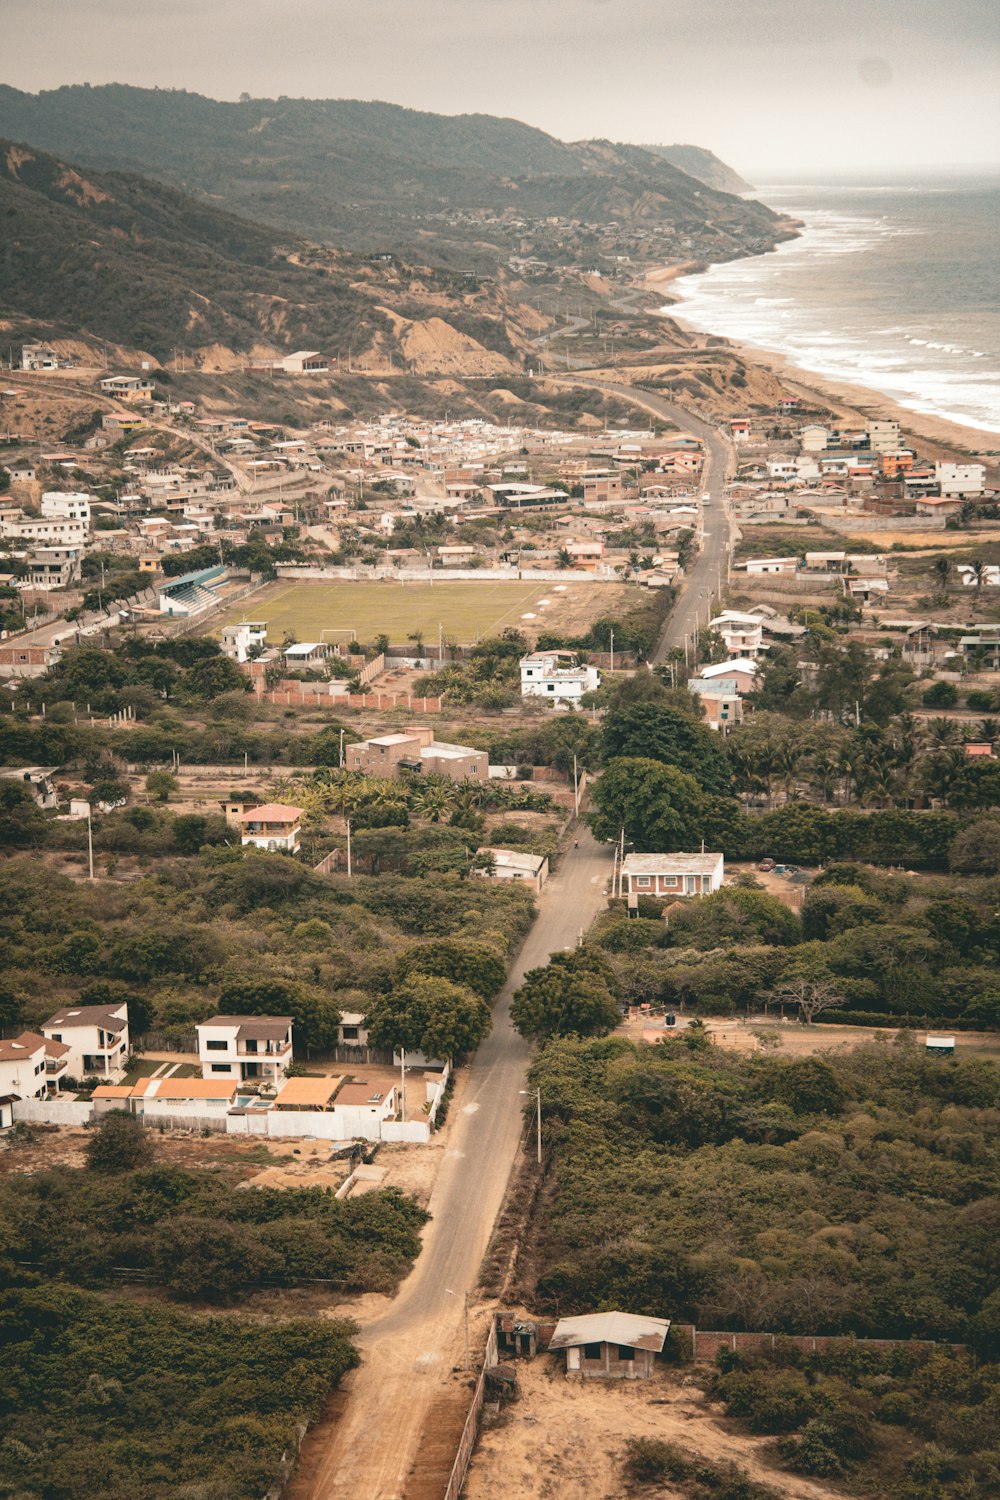 an aerial view of a small town near the ocean